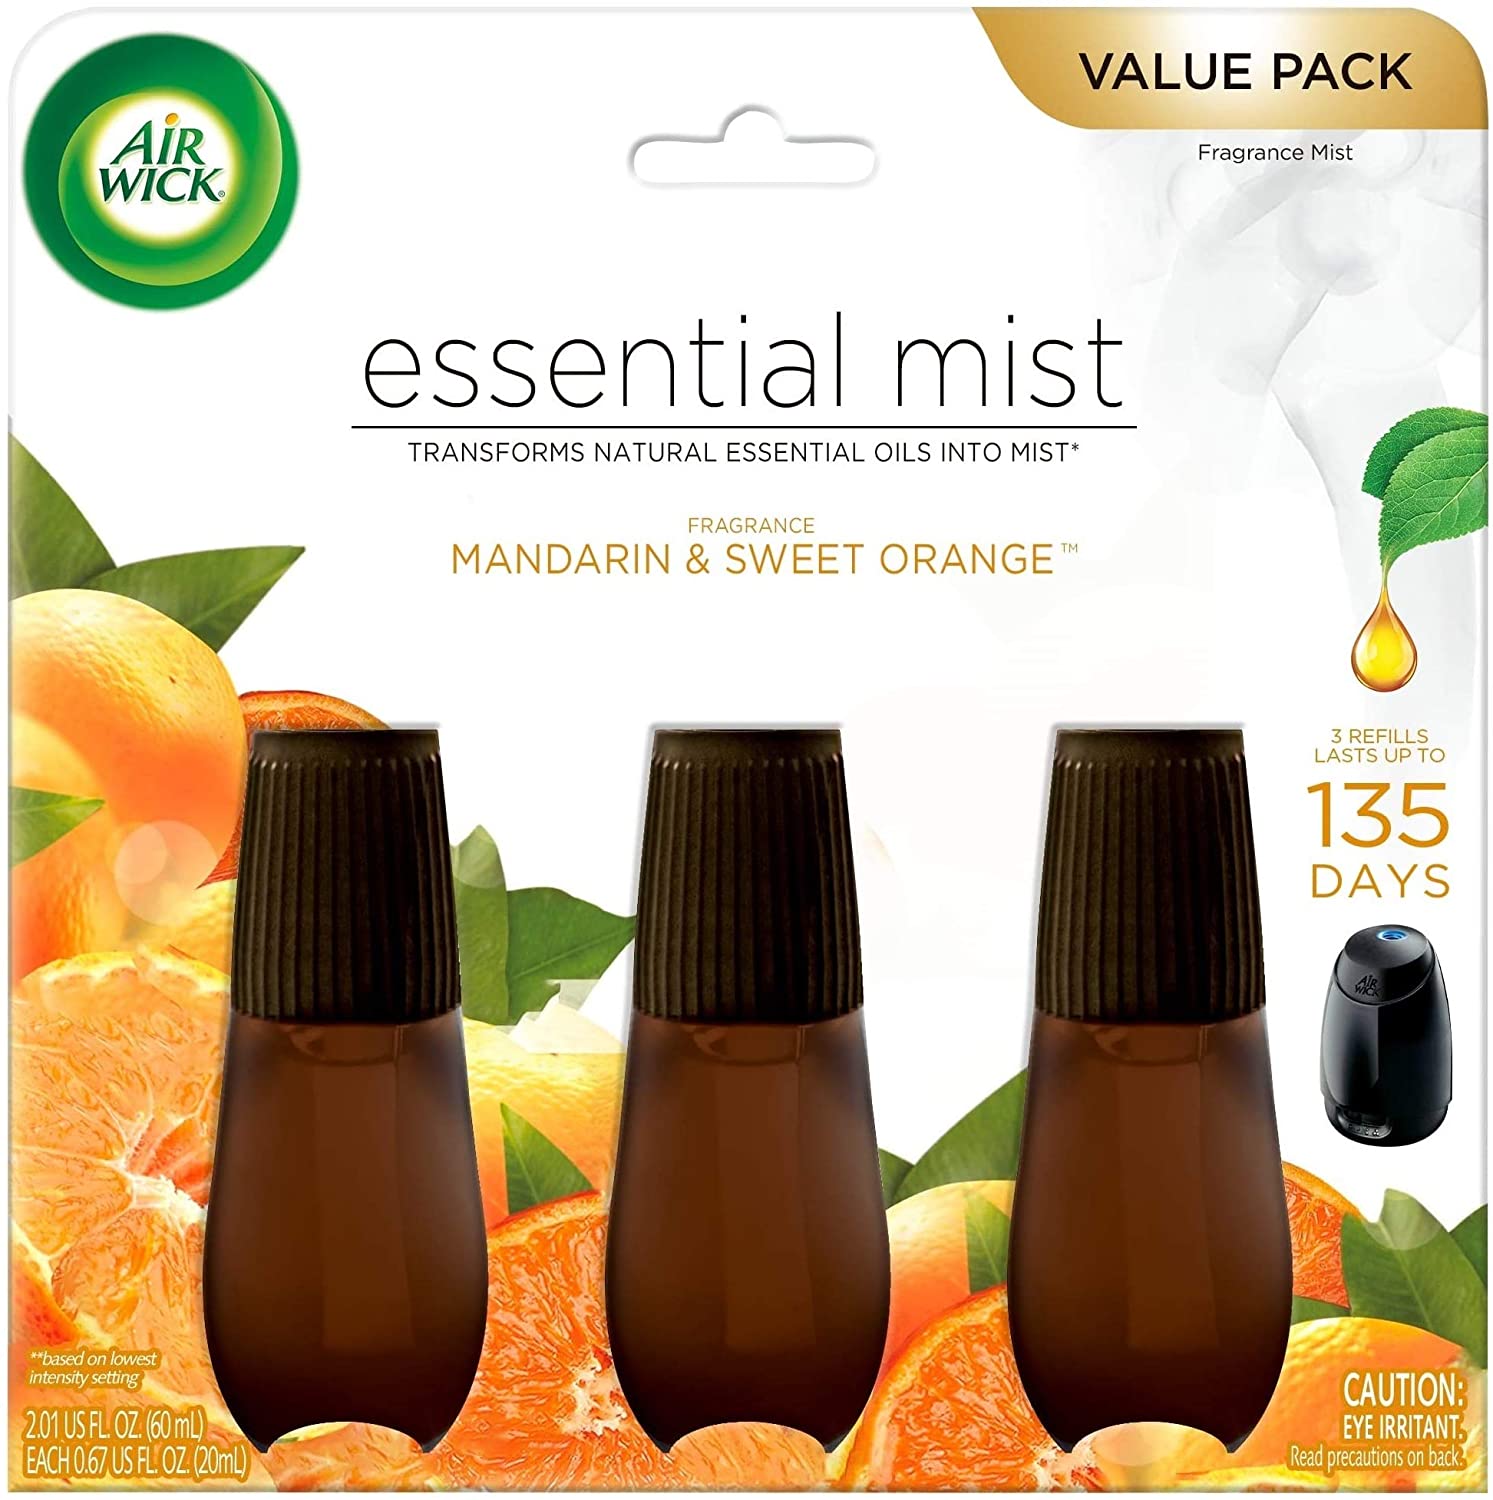 Air Wick Essential Mist Refill, 3 ct, Apple Cinnamon Medley, Essential Oils  Diffuser, Air Freshener, Fall scent, Fall decor